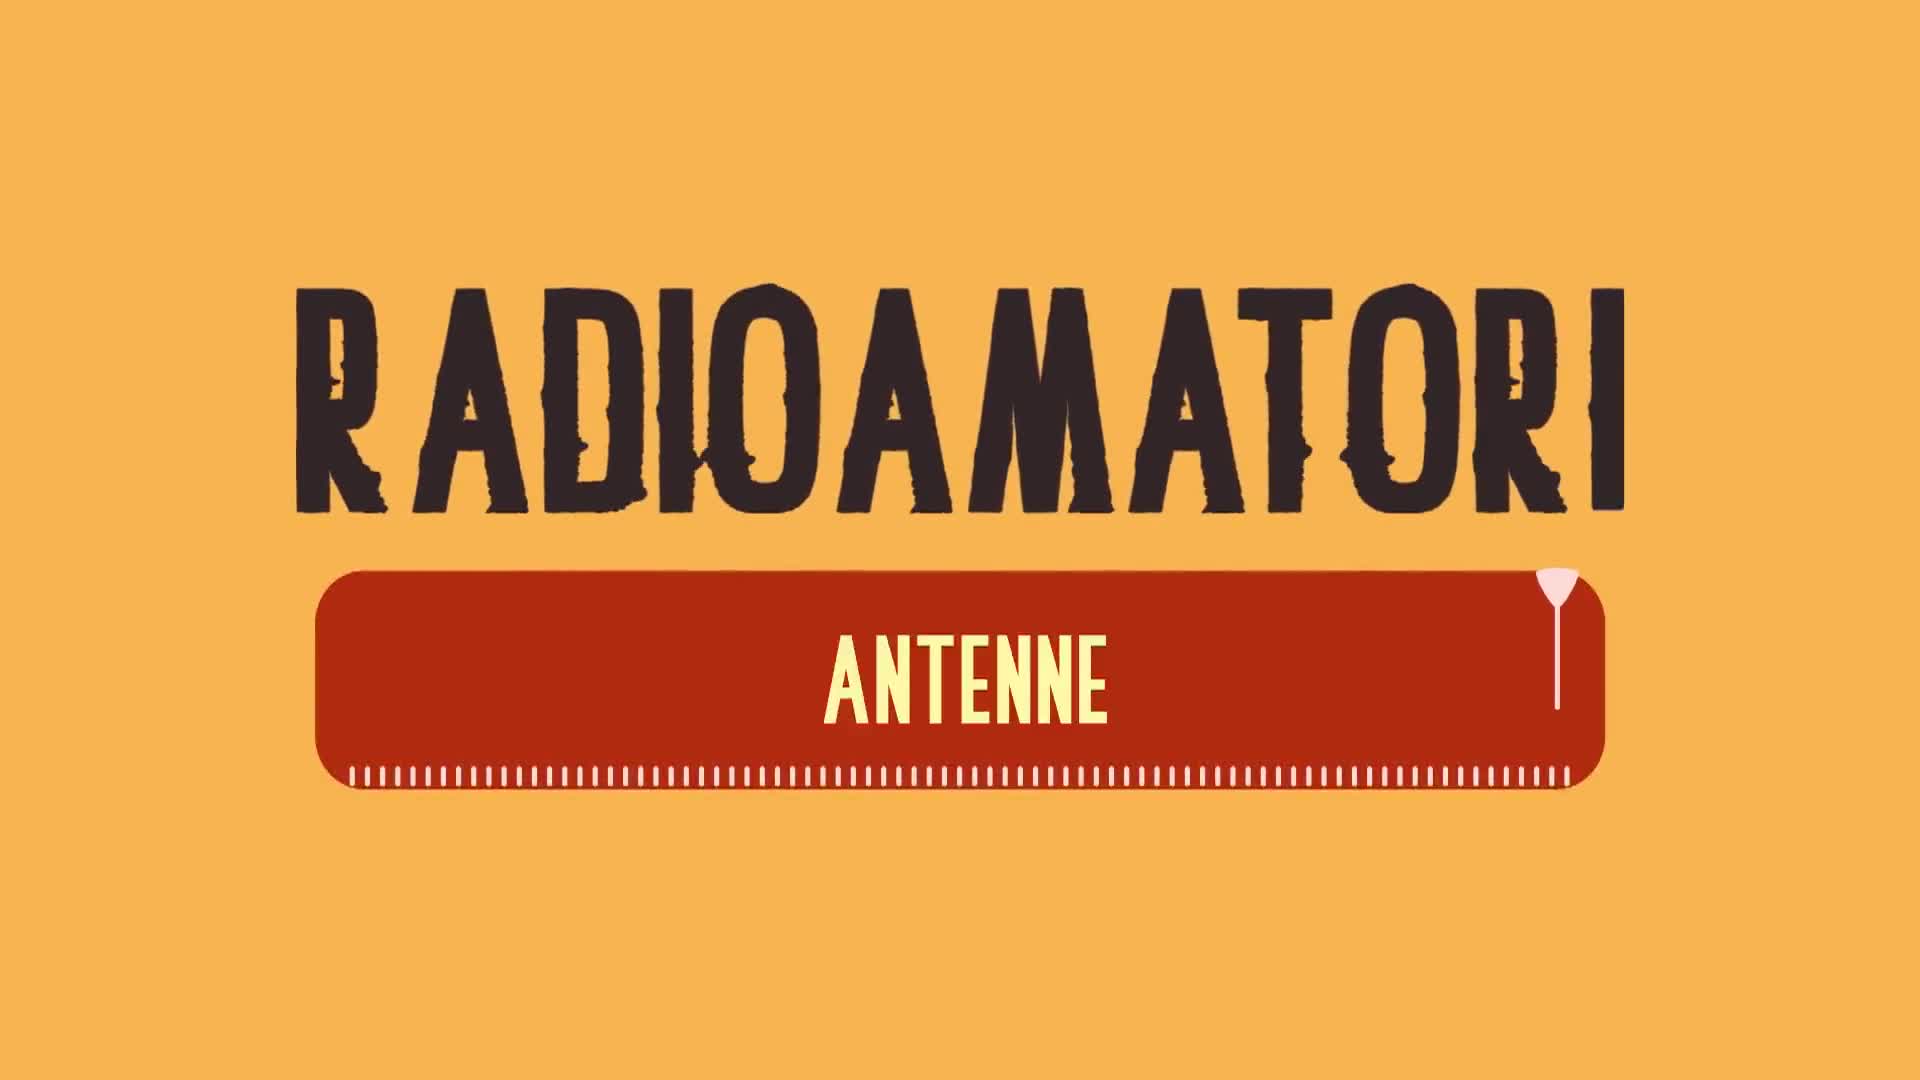 Radioamatori | Antenne - immagine